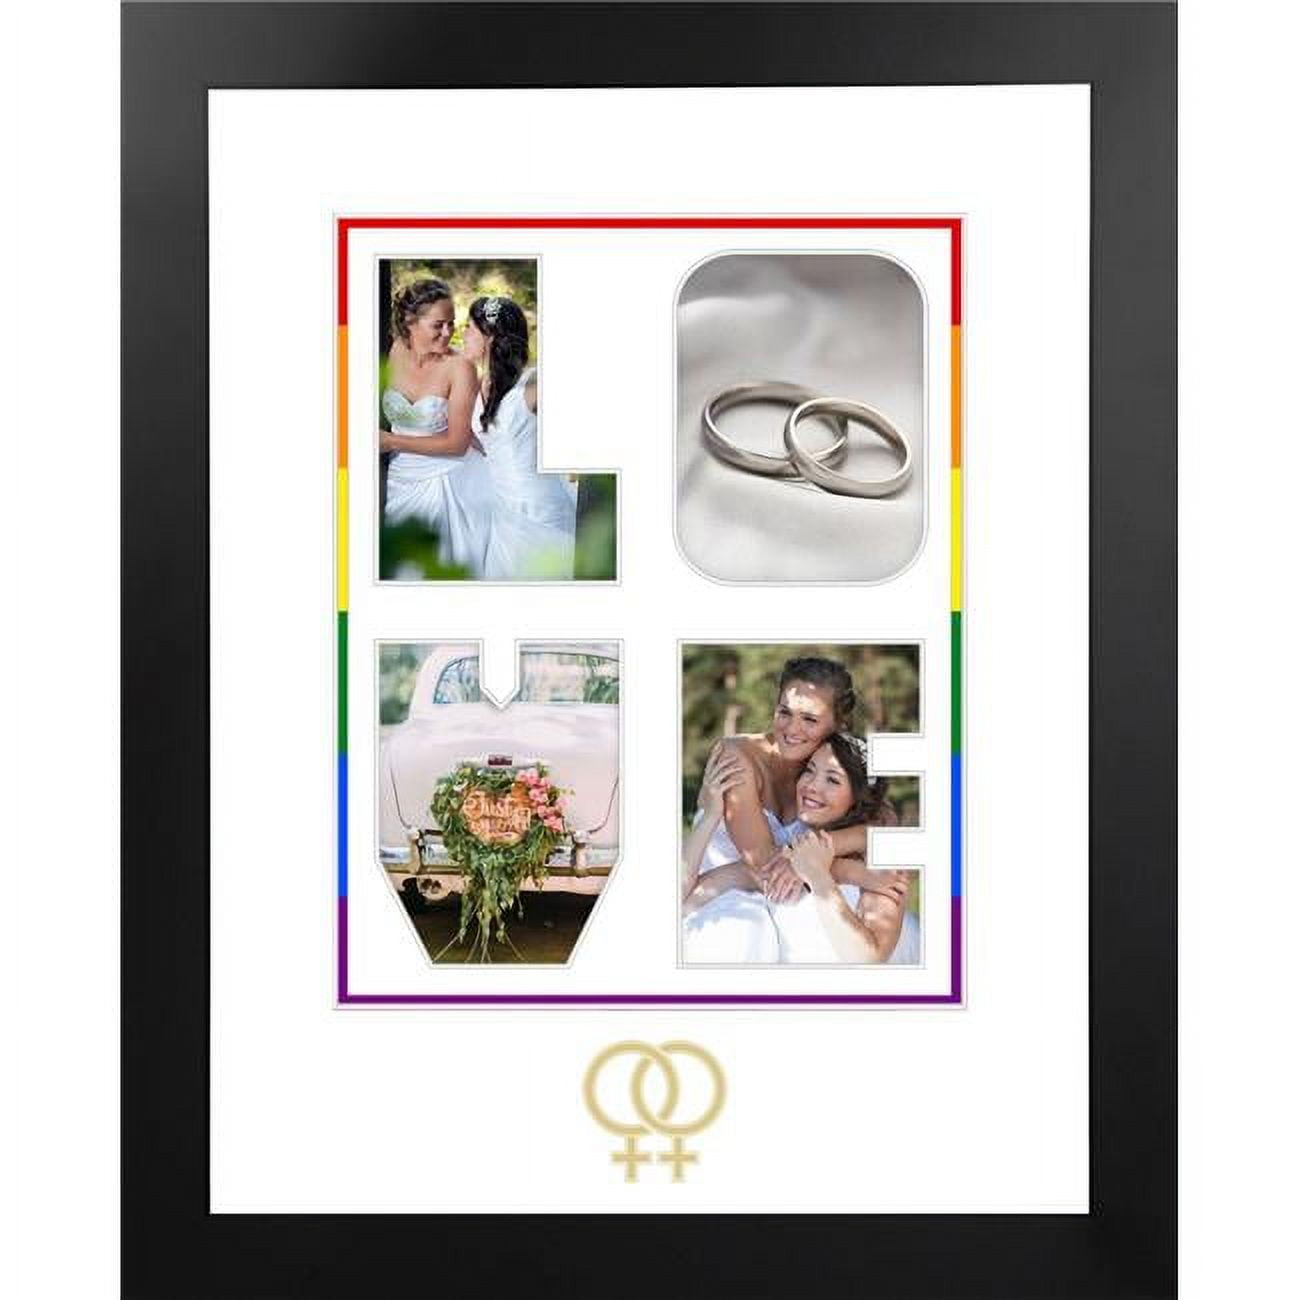 Ssvswg02 Lgbtq Pride Wedding Love Snapshot Photo Frame With White & Rainbow Mat -gold Interlocking Woman